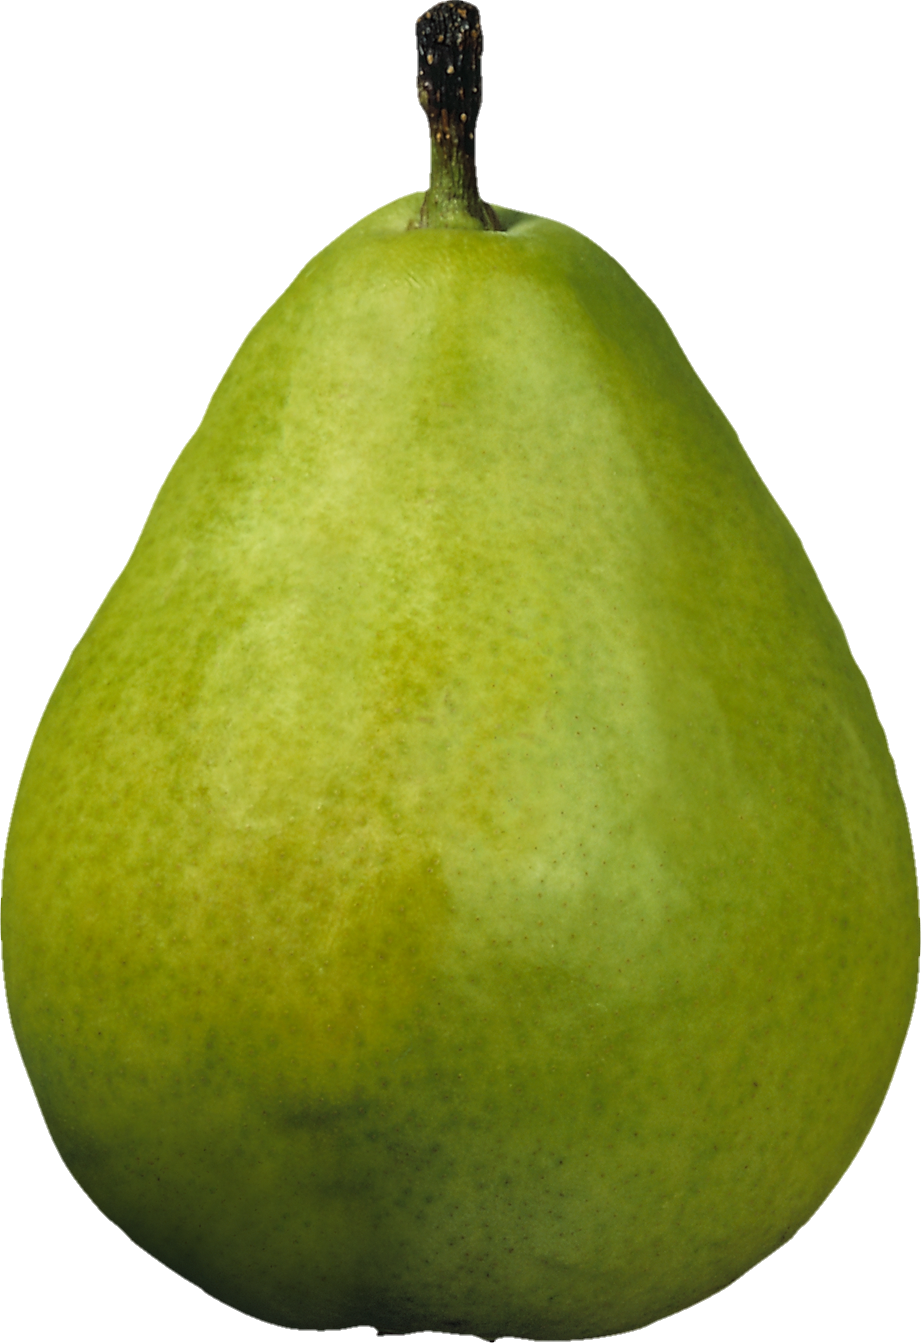 pear-8